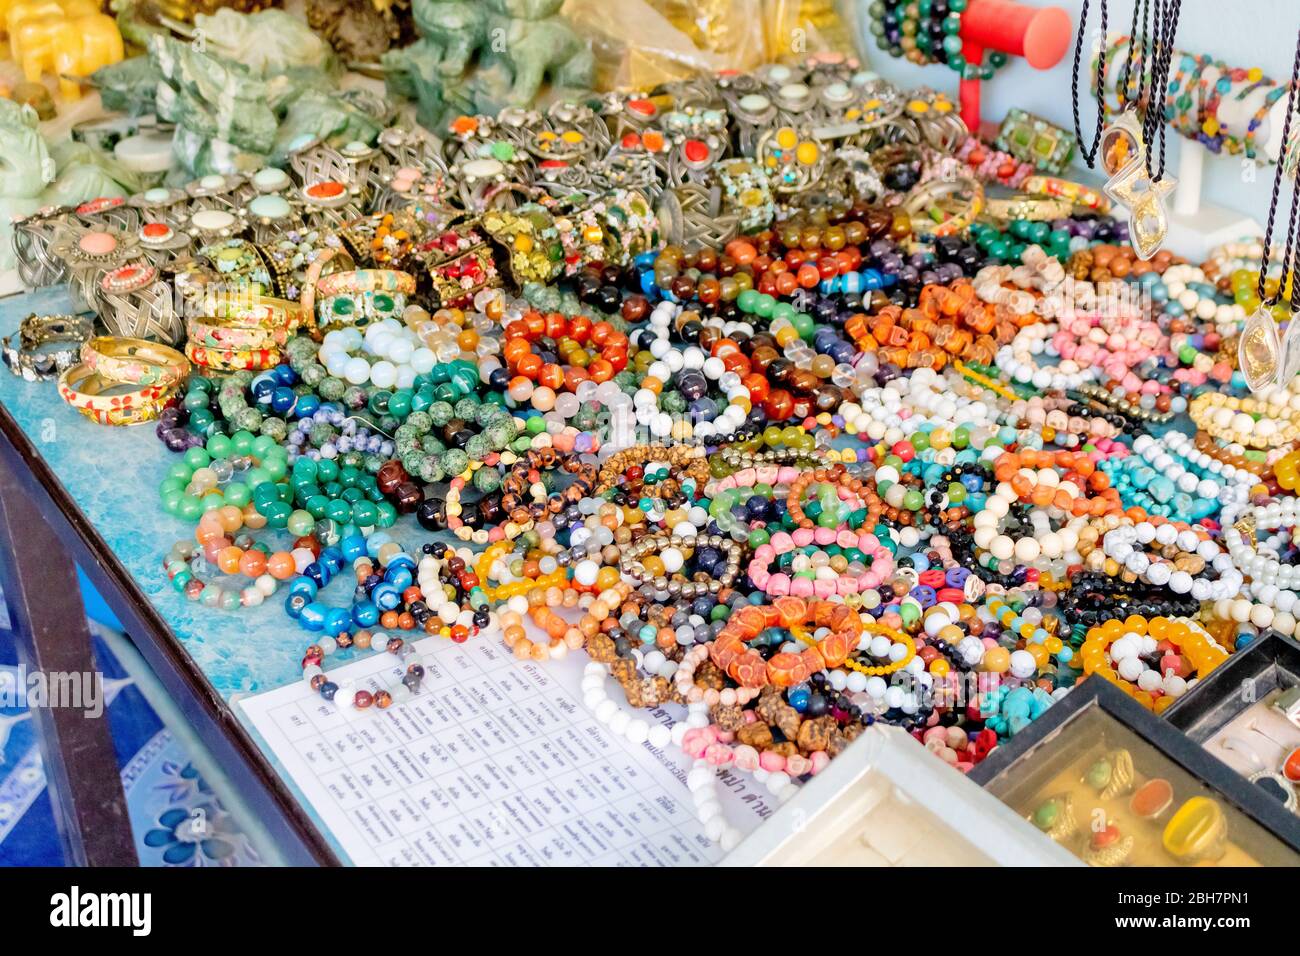 How To Make Bead Jewelery – The Bead Traders